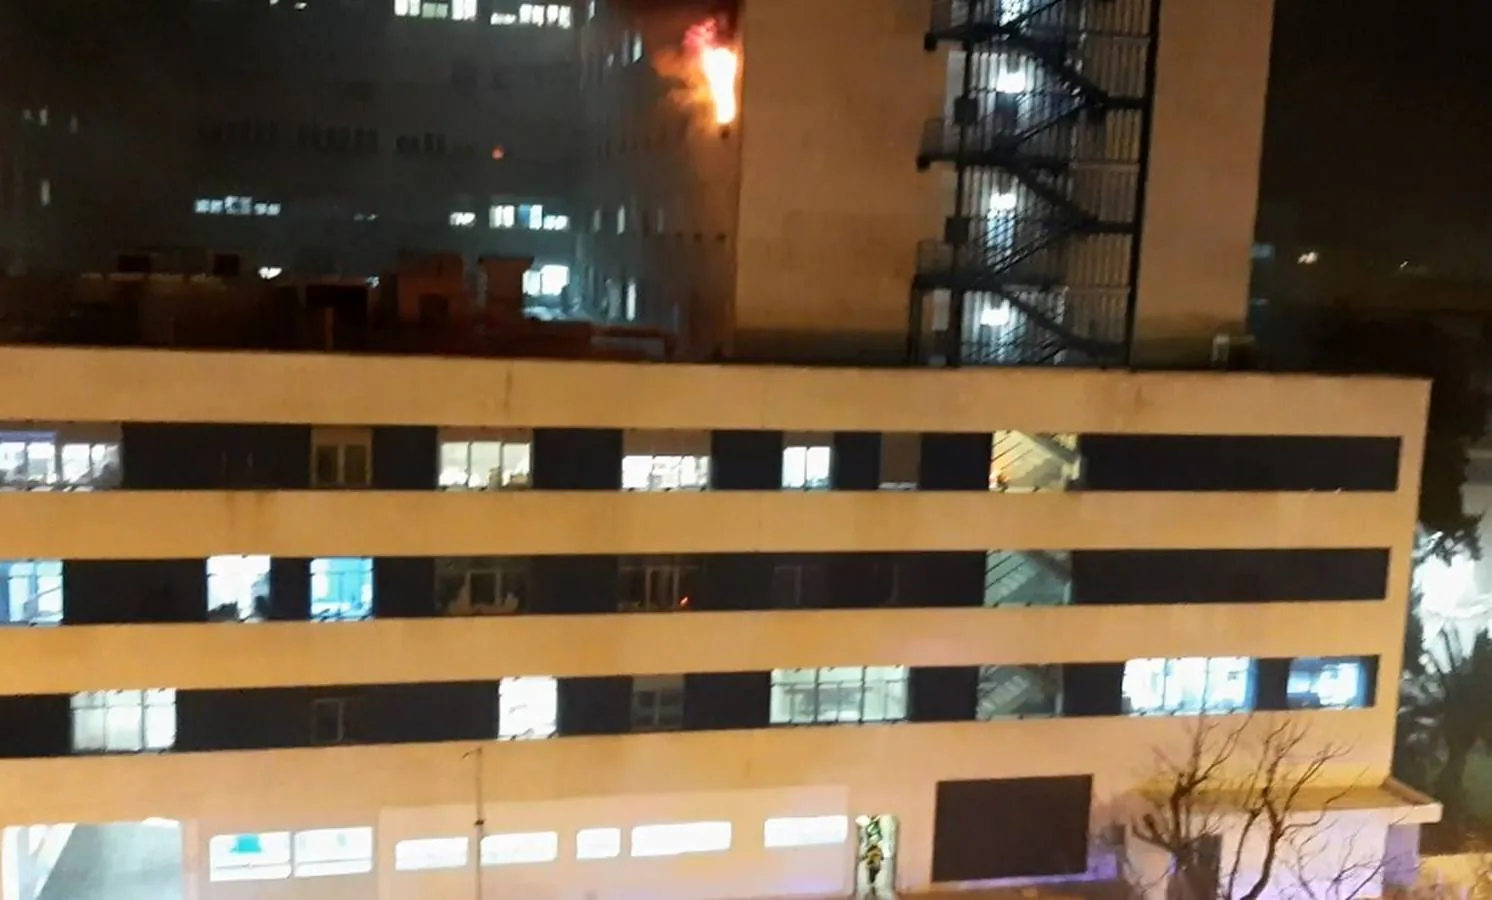 Un paciente Covid provoca un incendio al tratar de escapar del hospital Puerta del Mar de Cádiz